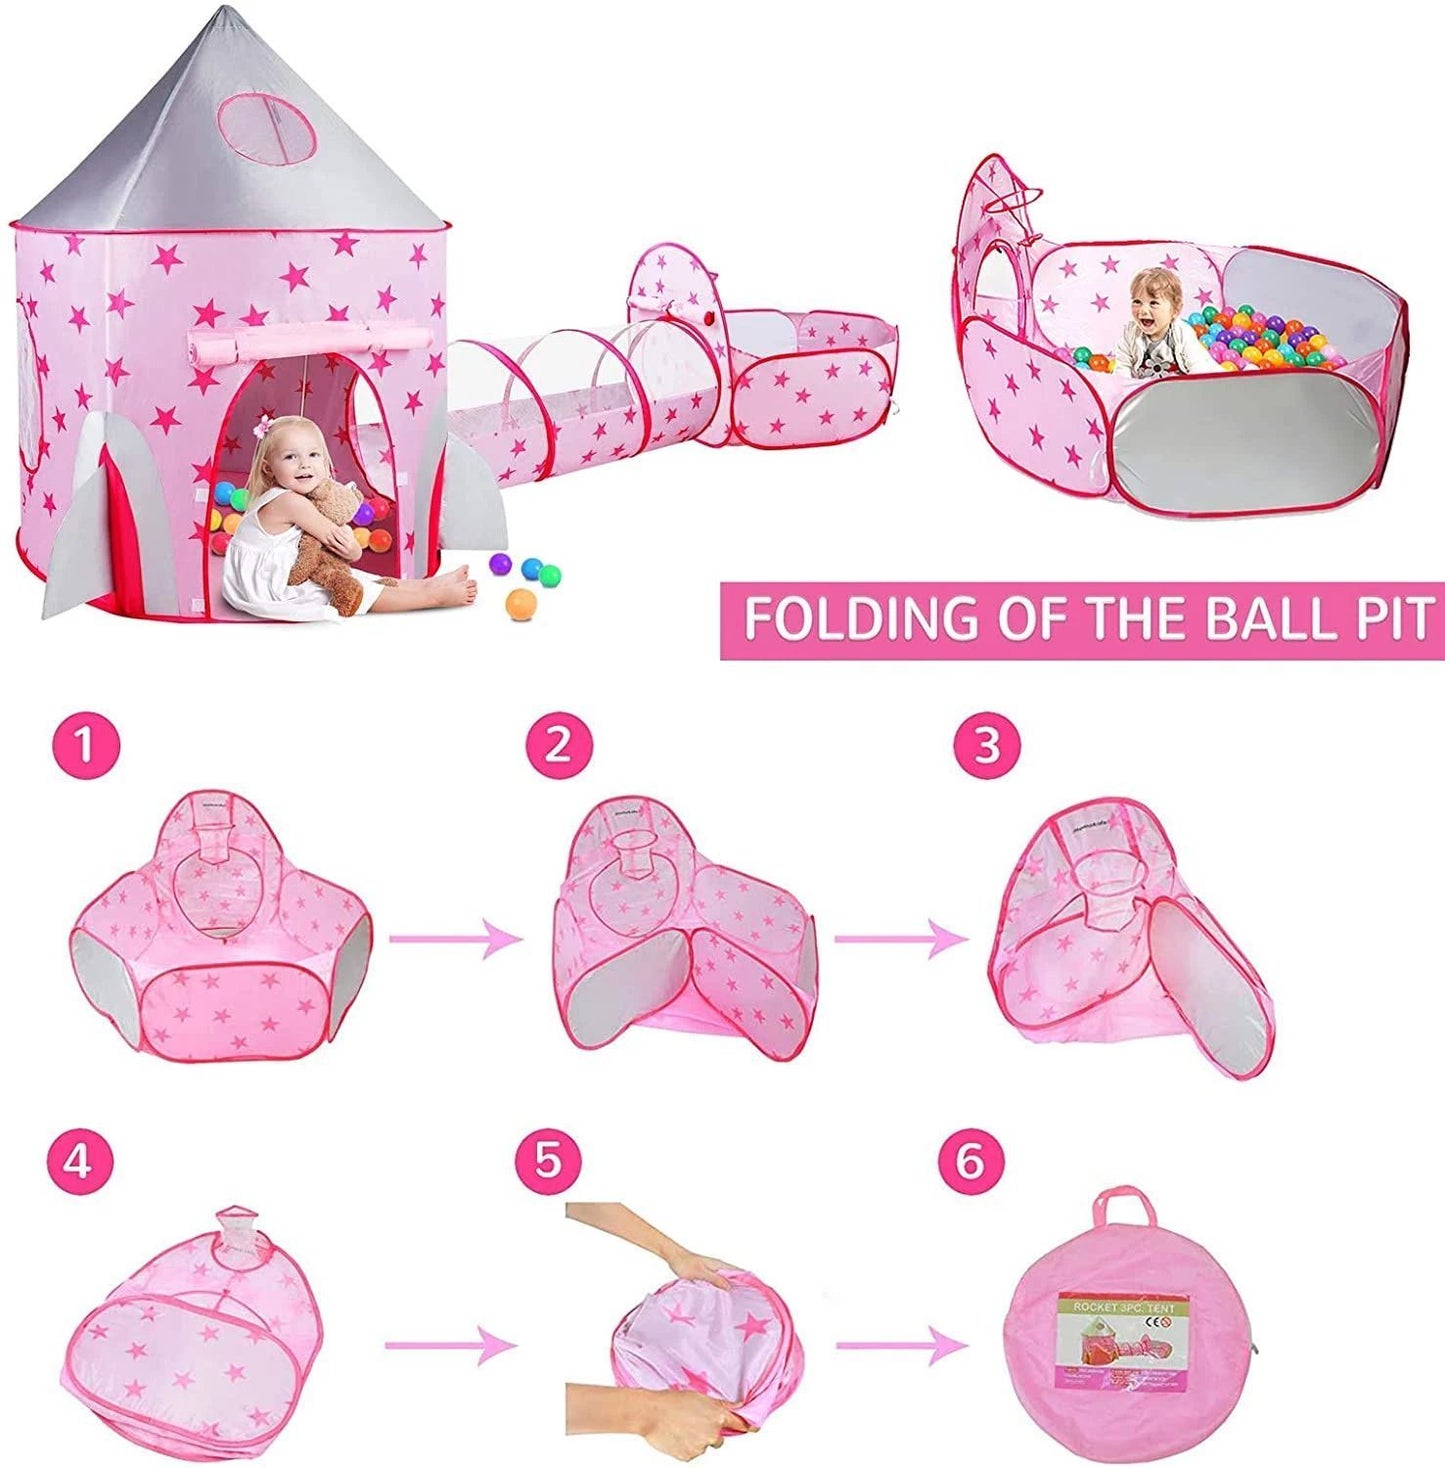 3 in 1 Rocket Ship Play Tent - Indoor/Outdoor Playhouse Set for Babies,Toddleers, Pink